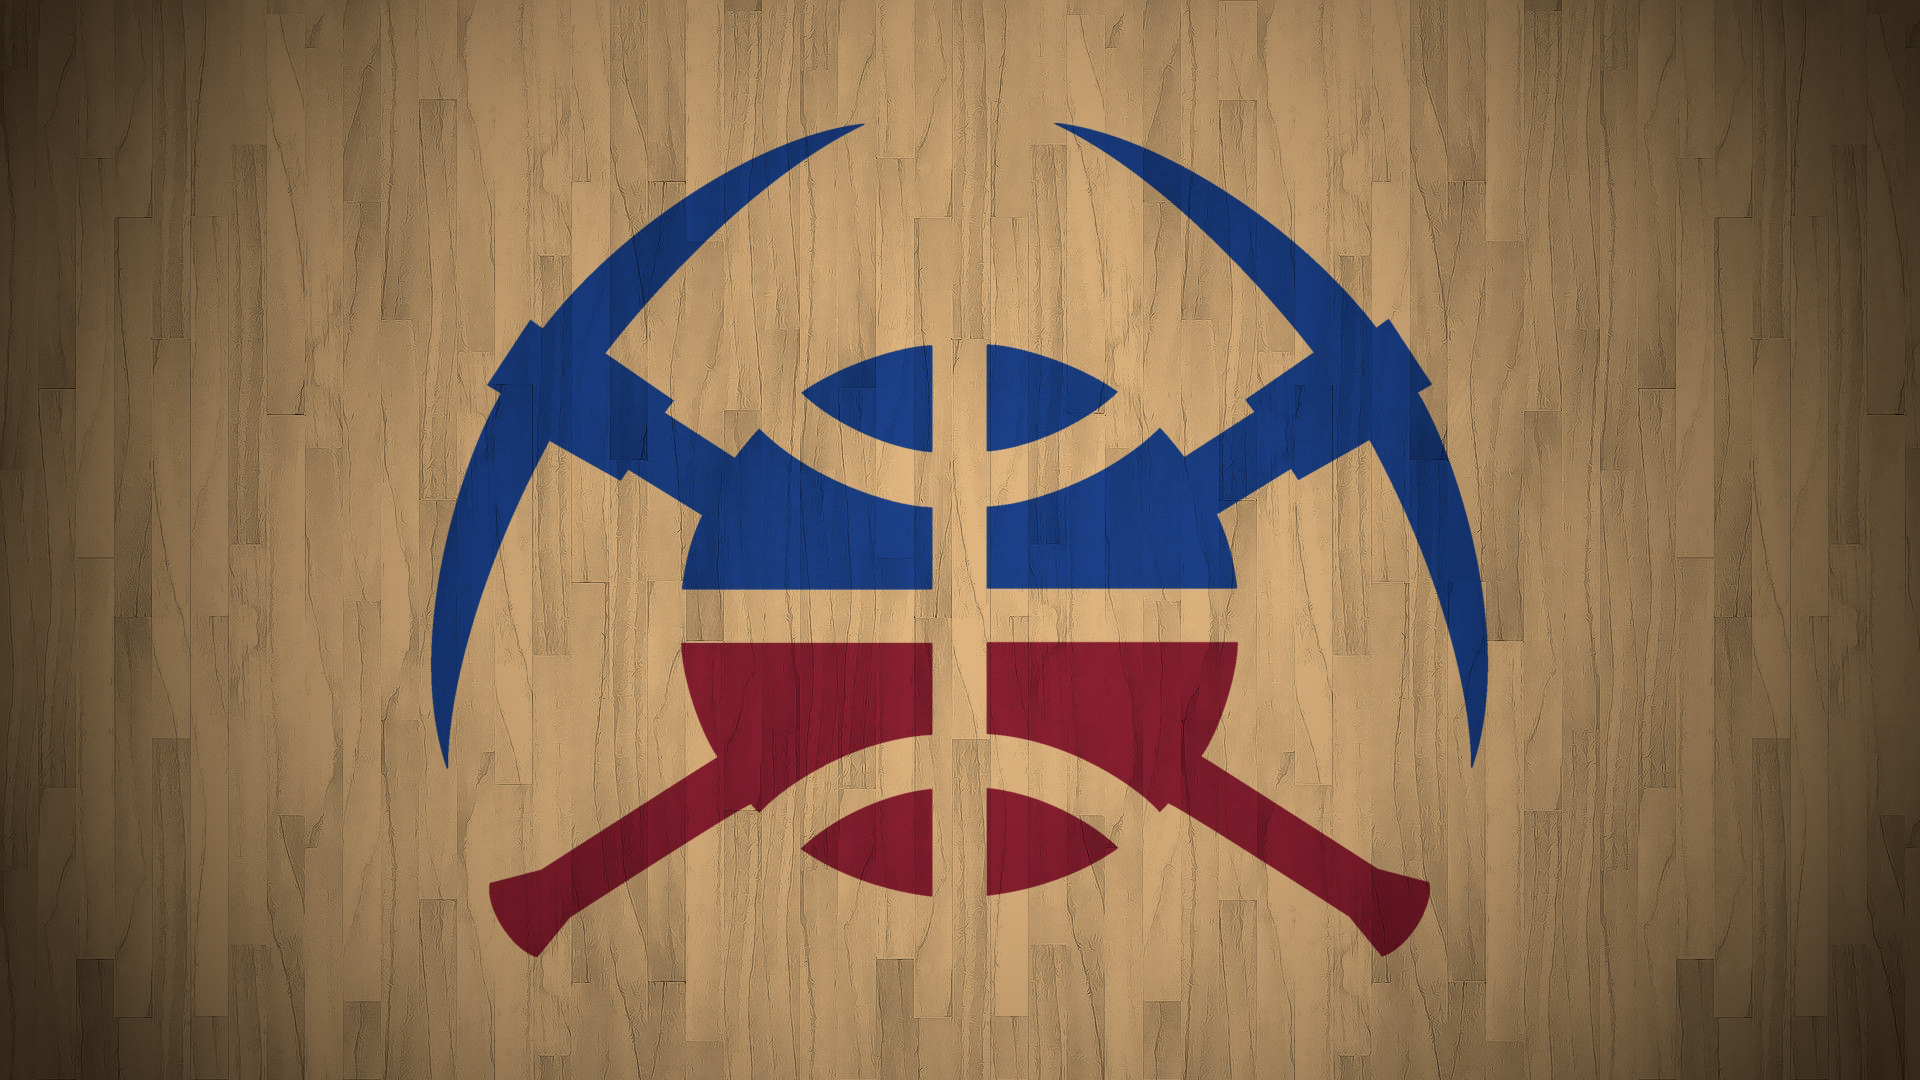 General 1920x1080 Denver Nuggets NBA basketball logo Denver Colorado simple background minimalism wood